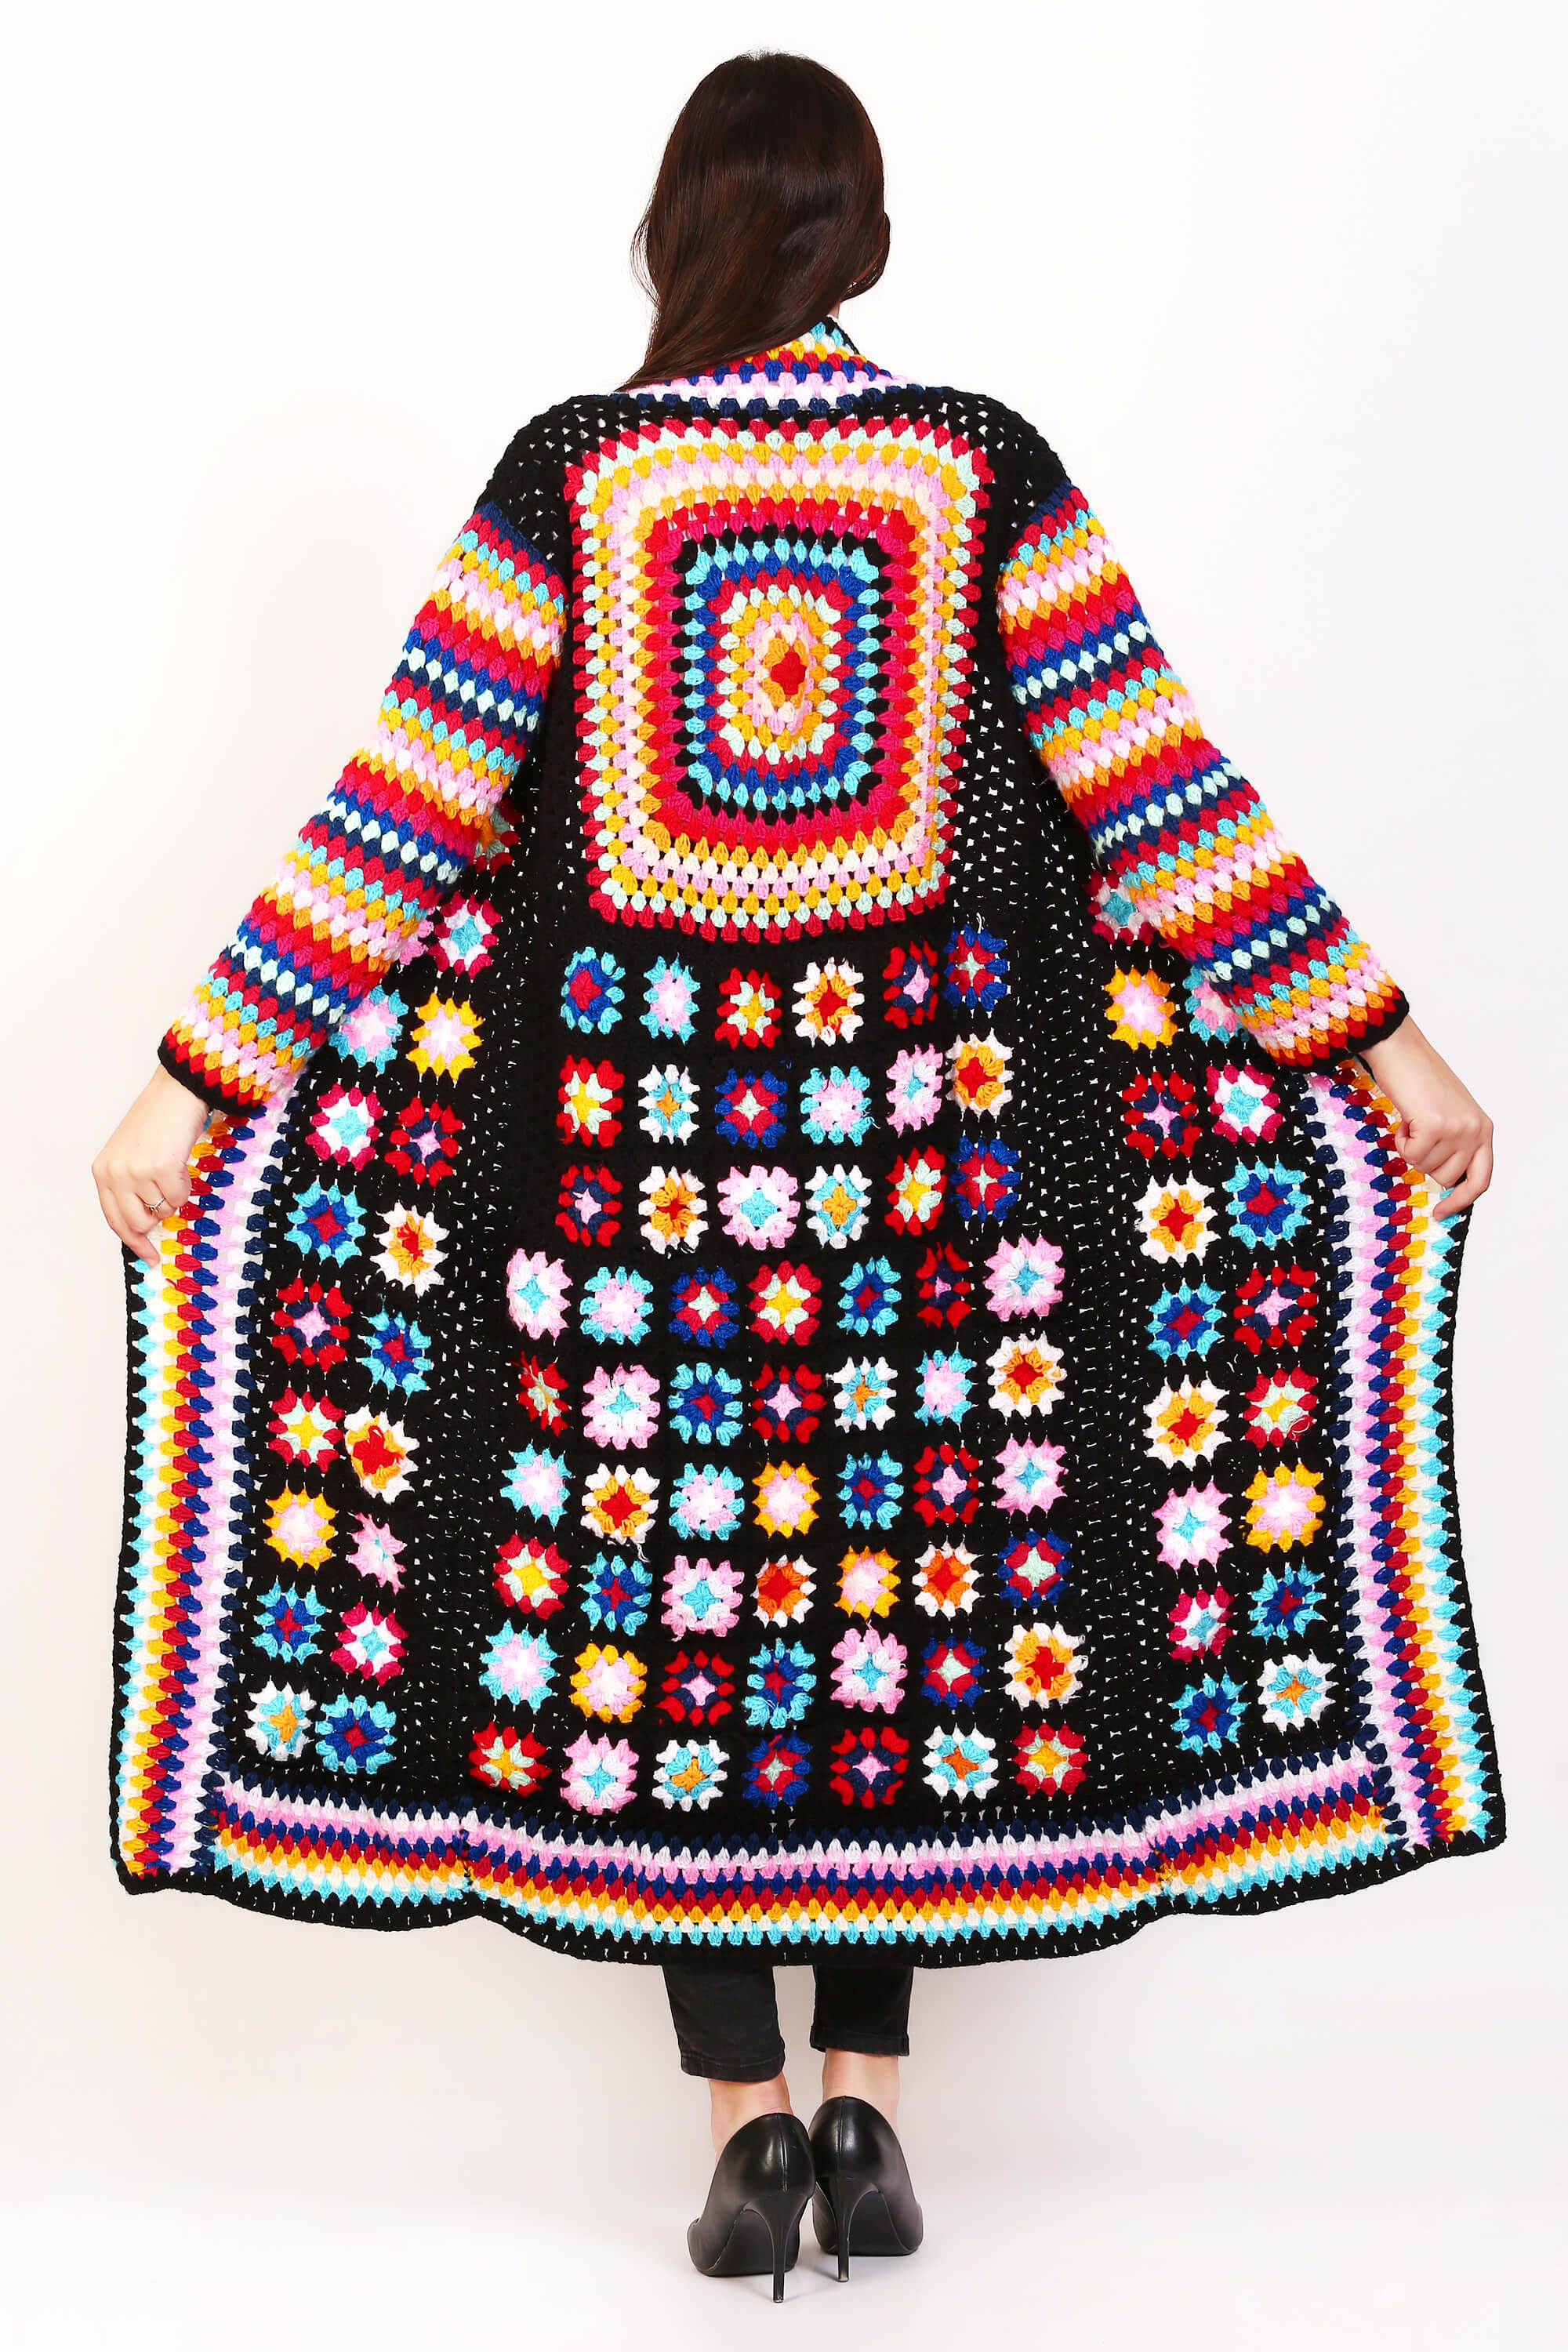 Boho Chic Delight Crochet Cardigan